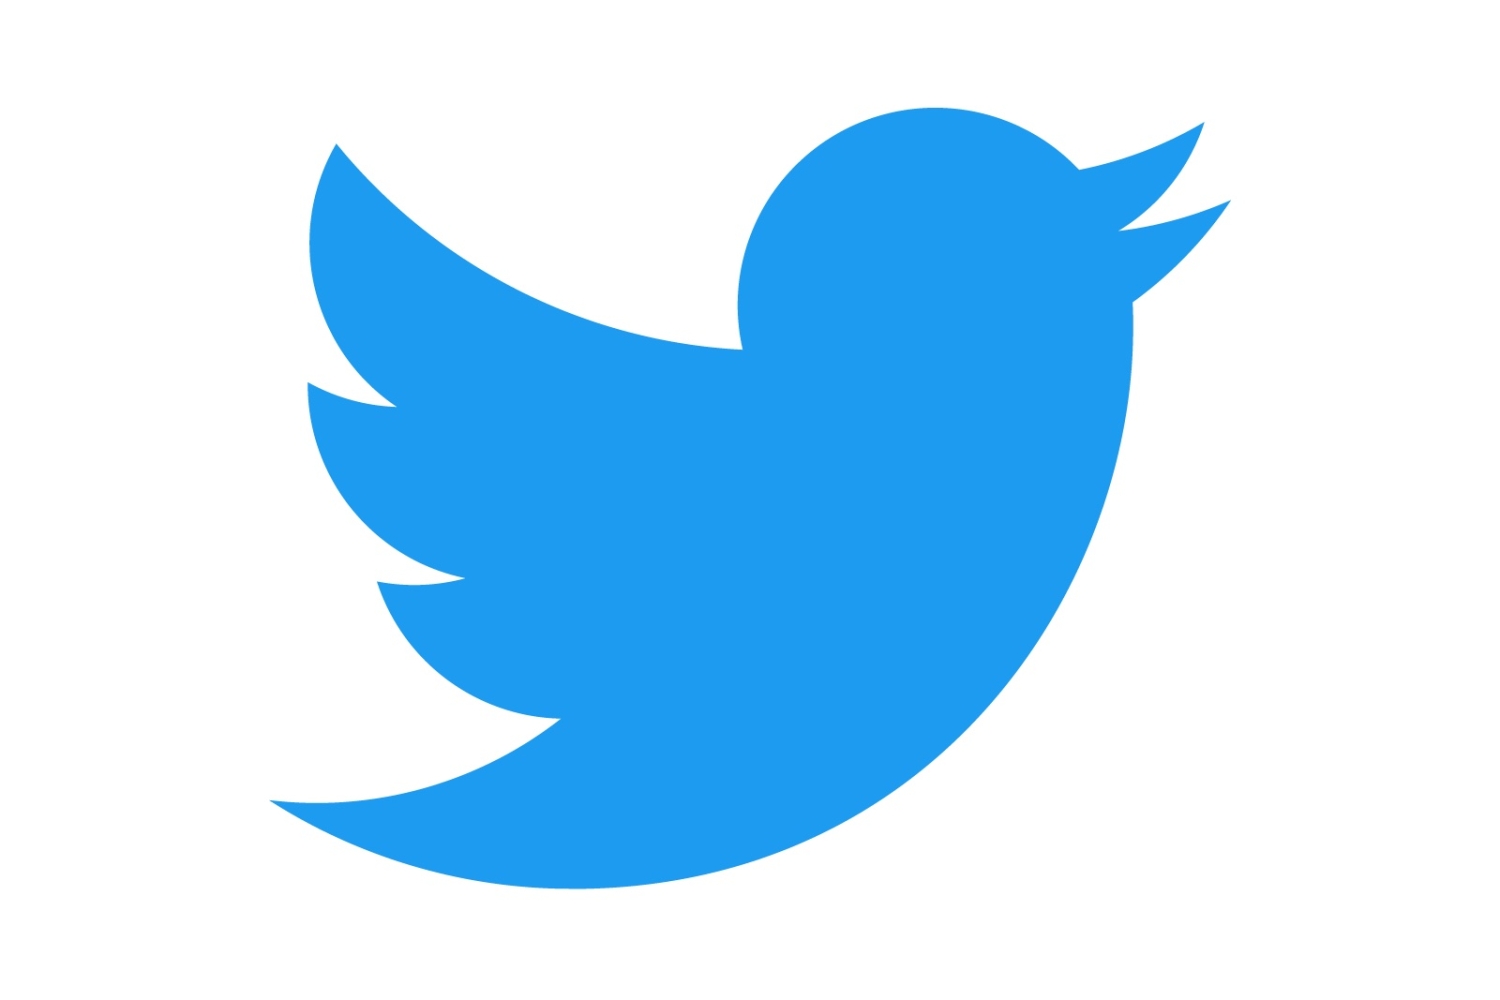 TweakTown Enlarged Image - Twitter logo - image: Twitter.com